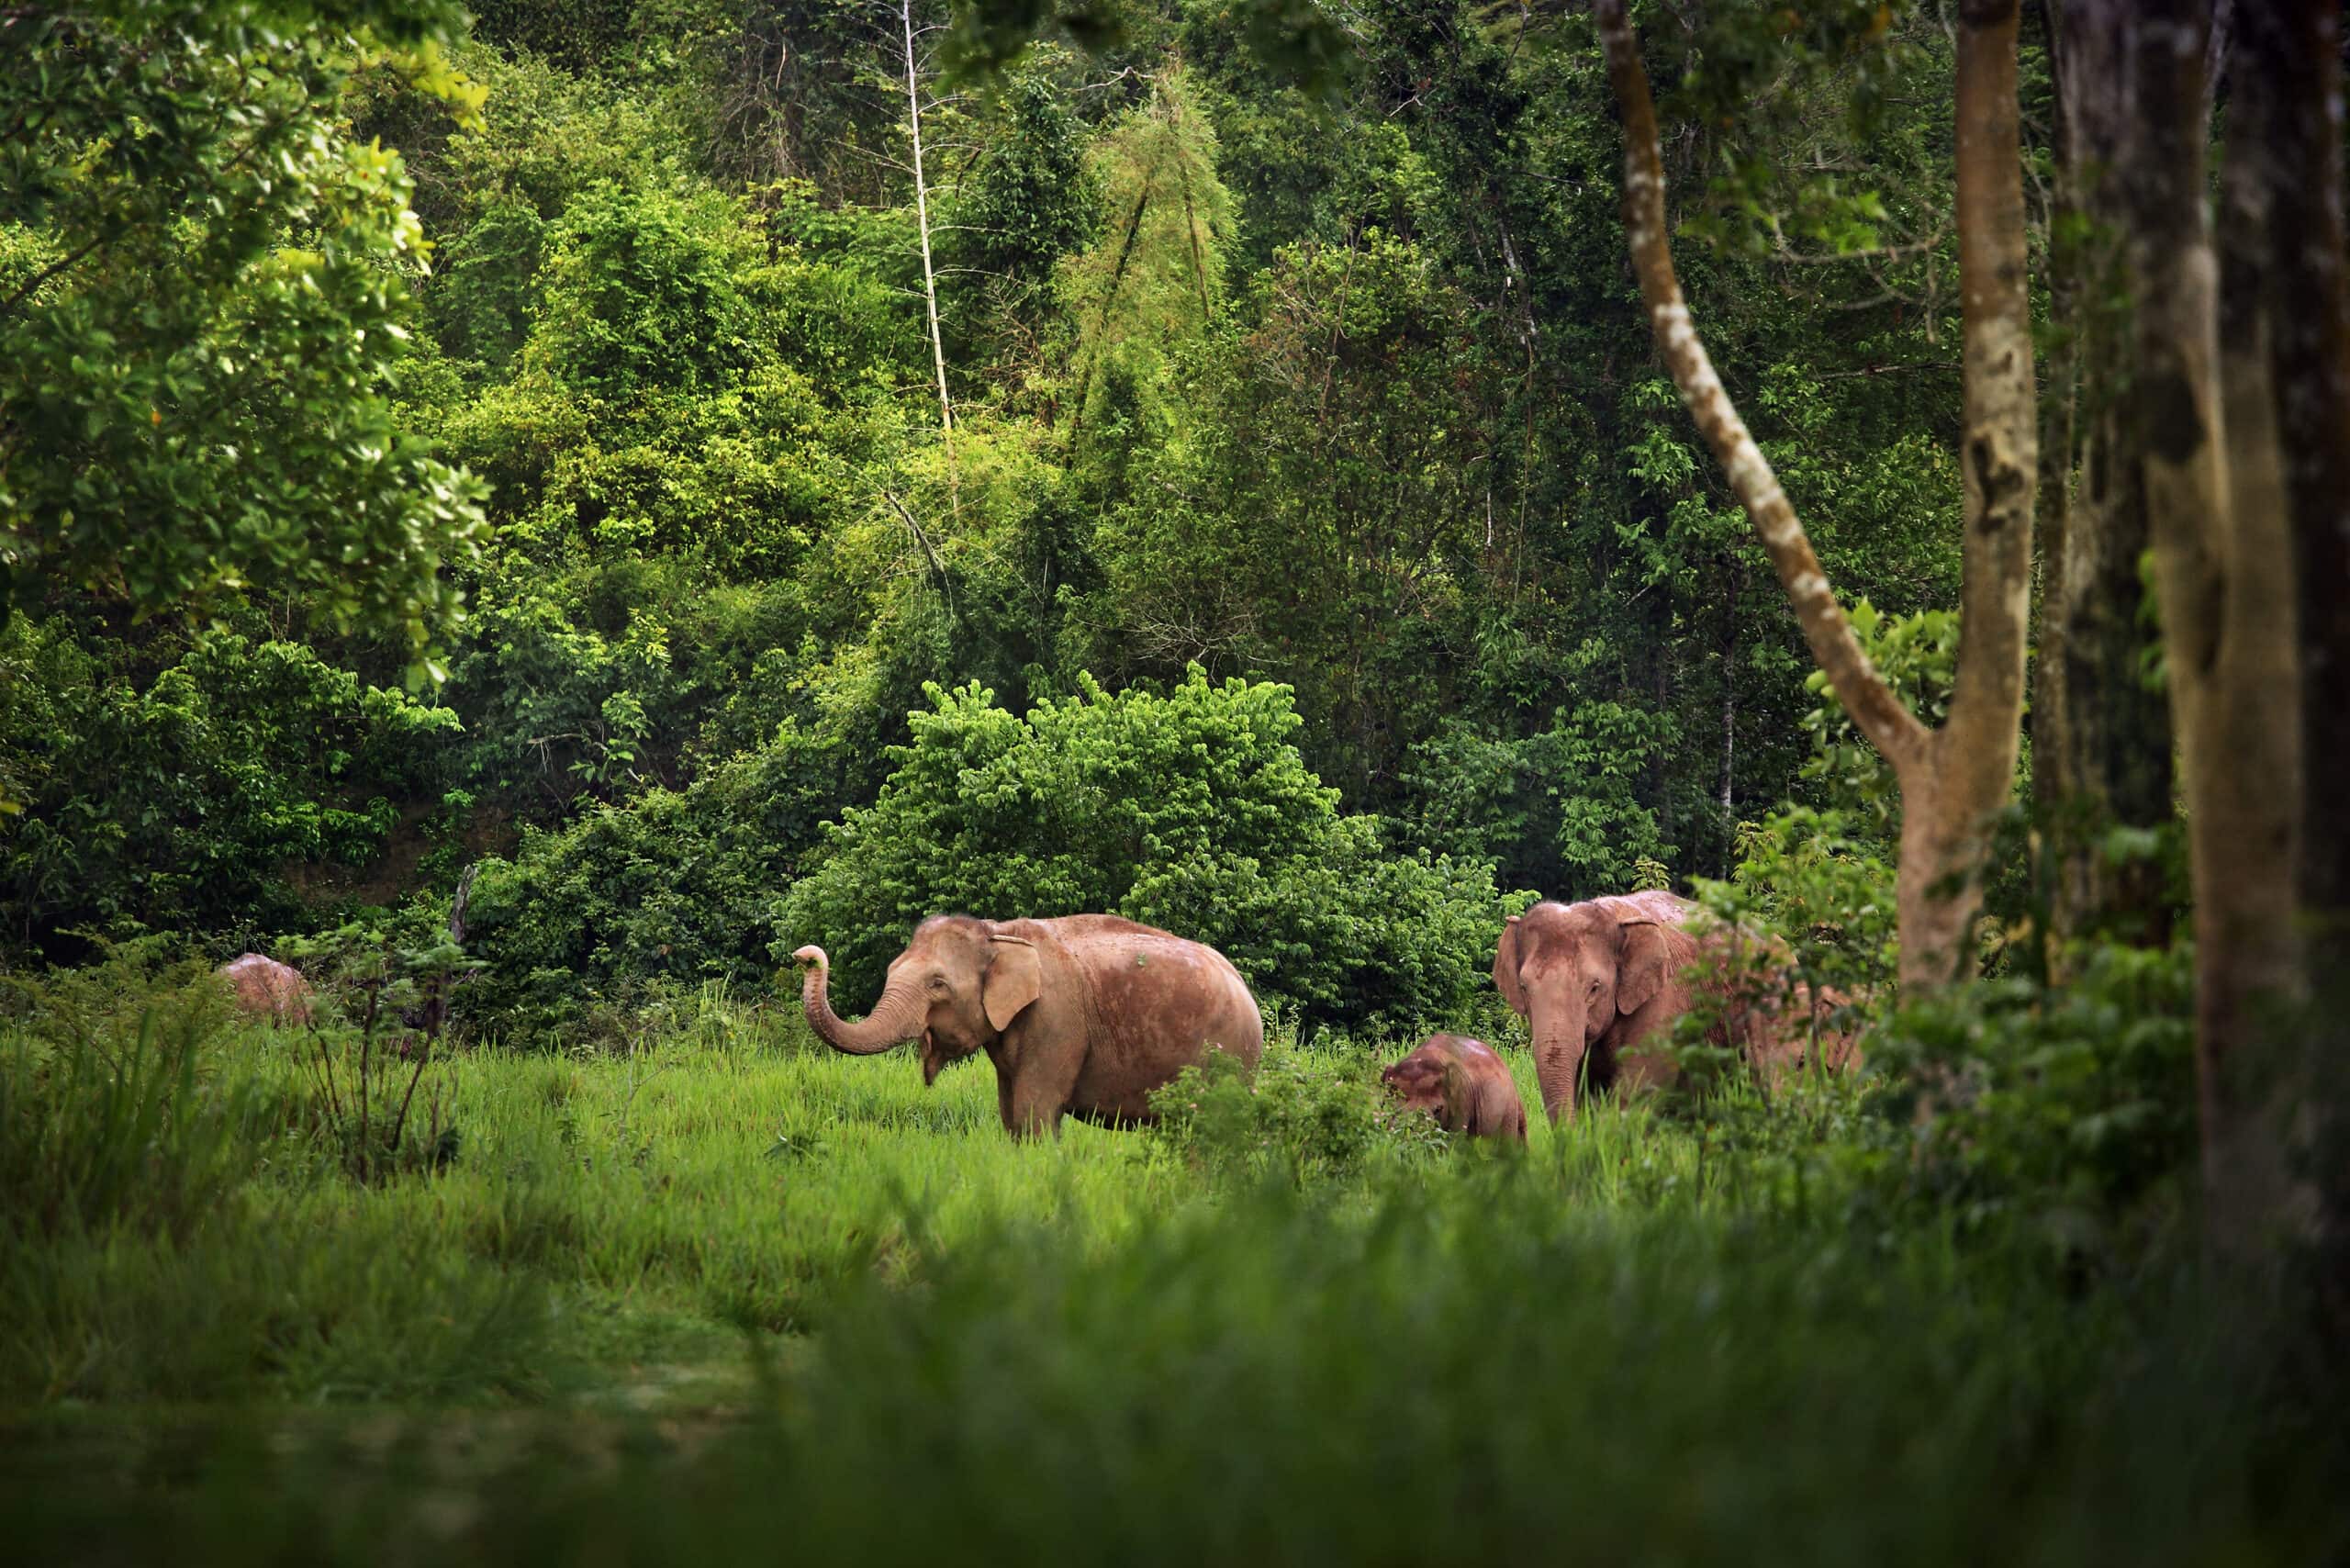 The Habitat of Elephants in Thailand